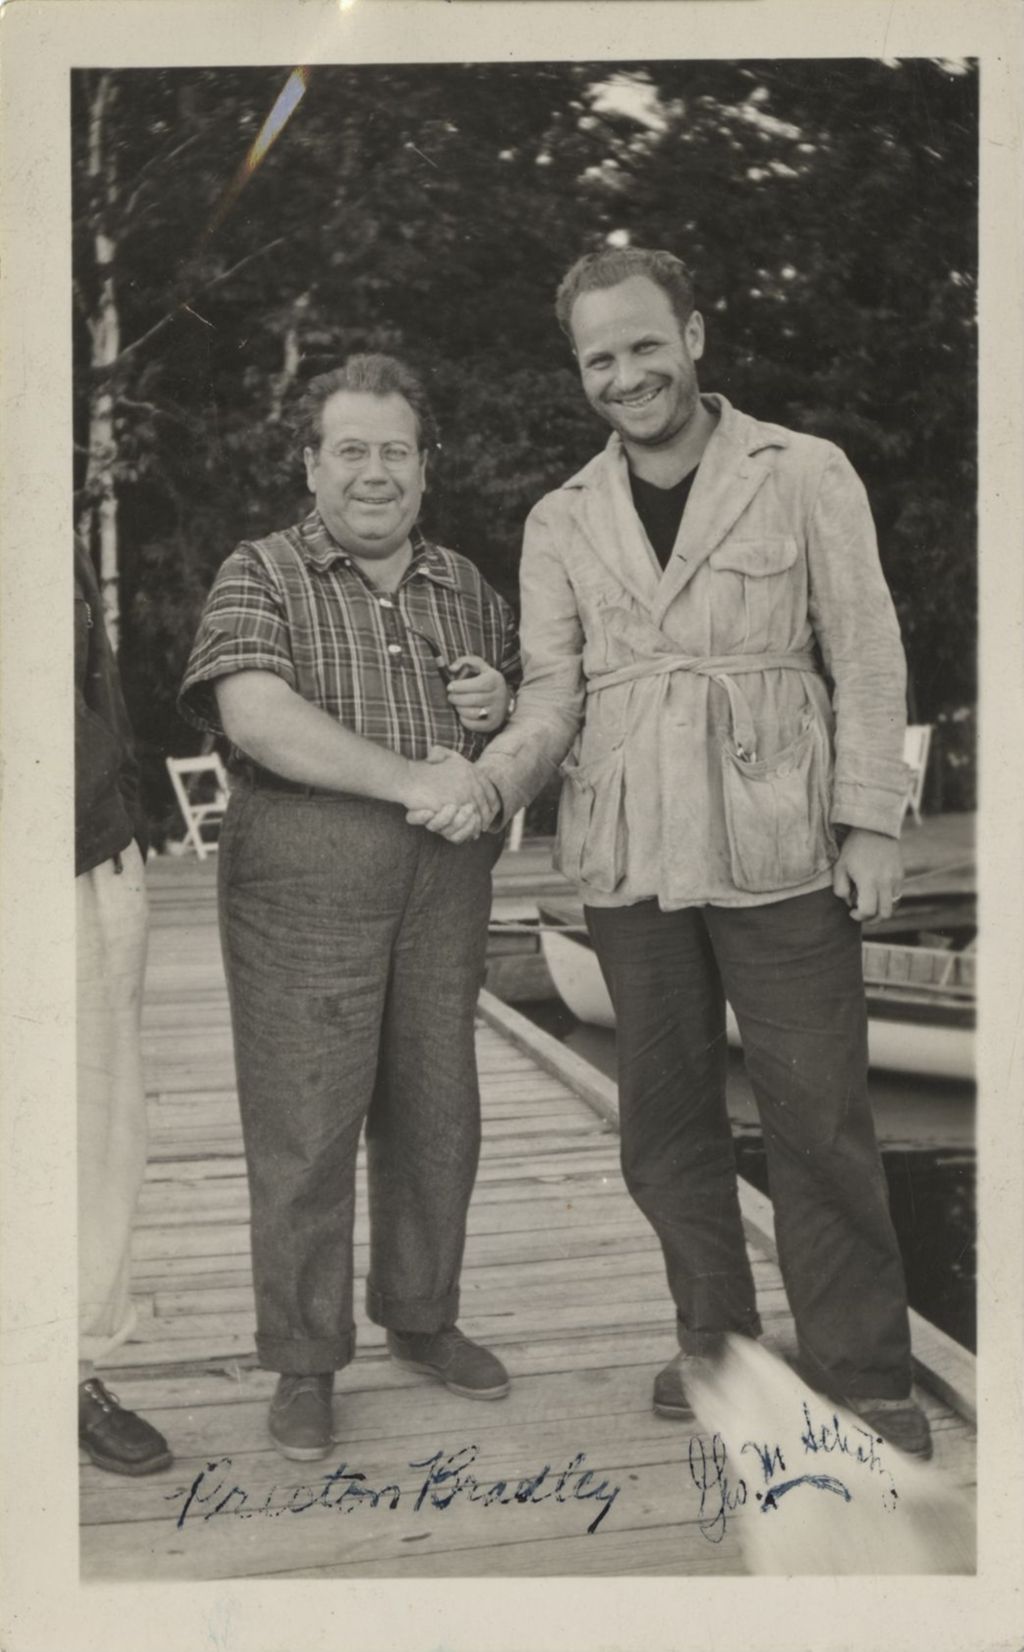 Miniature of Preston Bradley and George M. Schatz